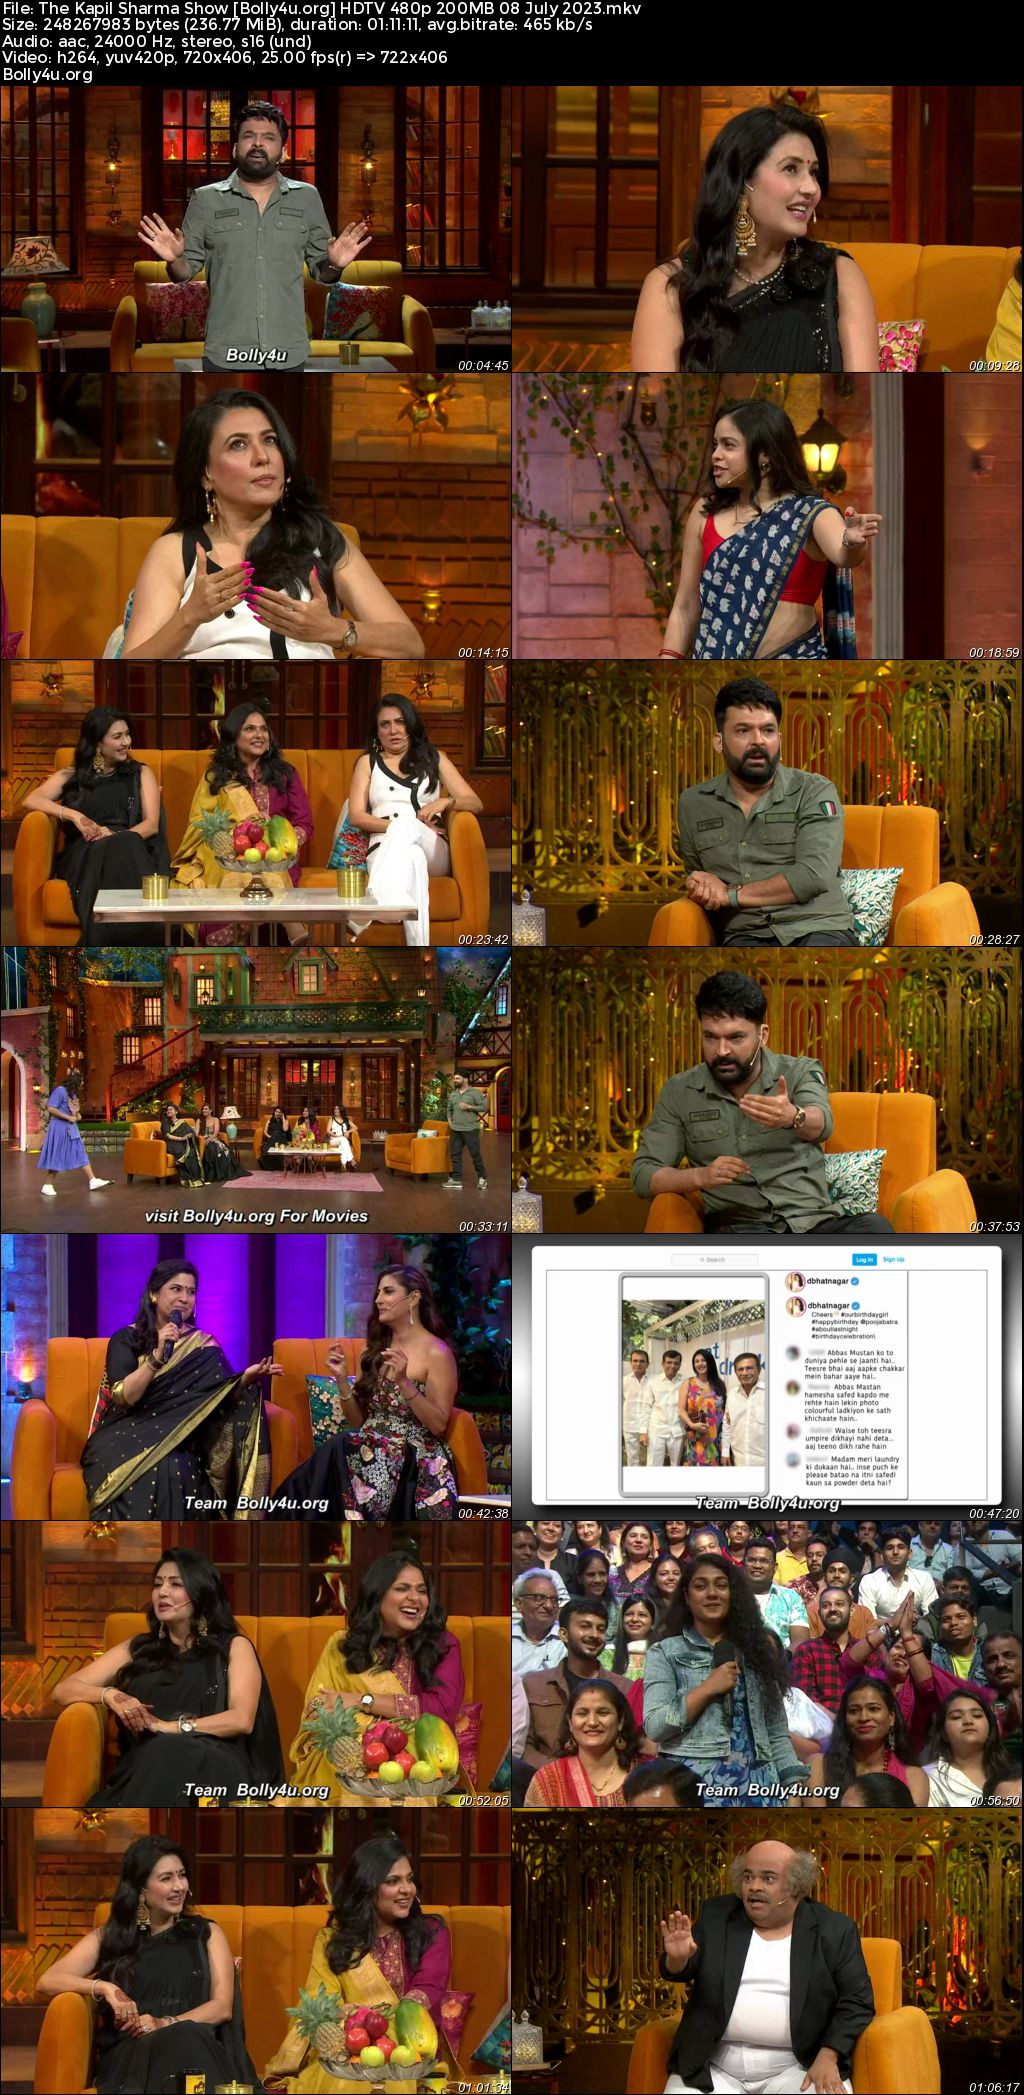 The Kapil Sharma Show HDTV 480p 200MB 08 July 2023 Download